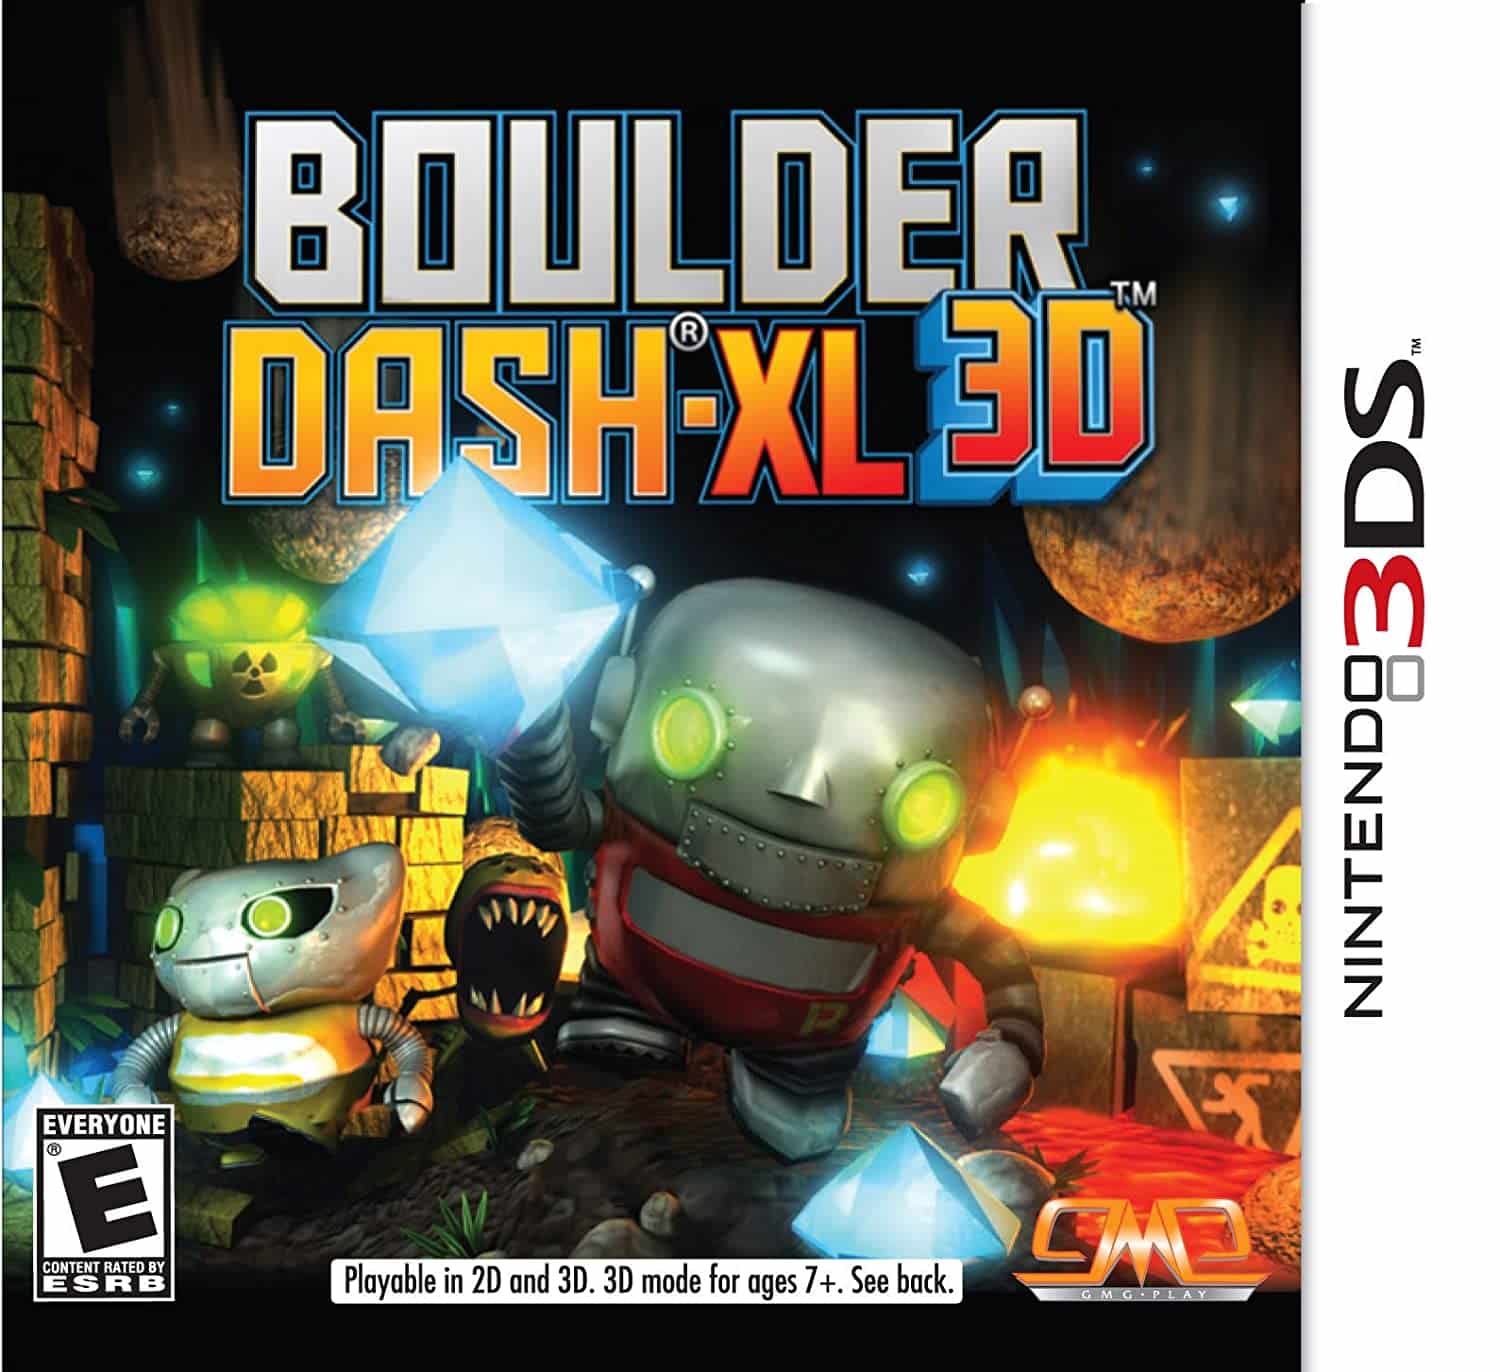 Boulder Dash-XL 3D player count stats